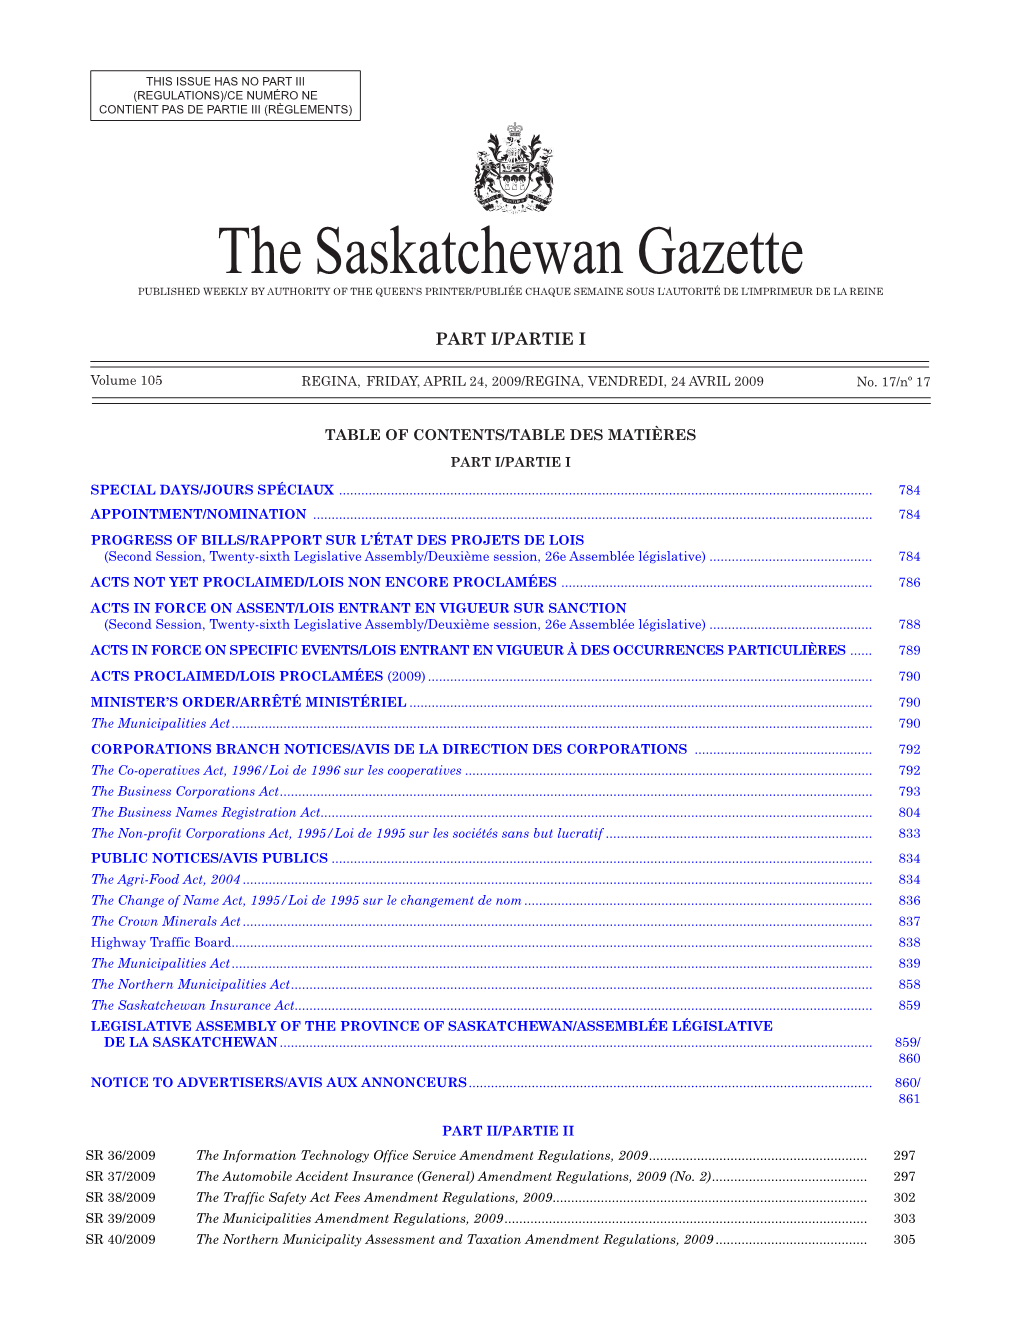 Sask Gazette, Part I, Apr 24, 2009